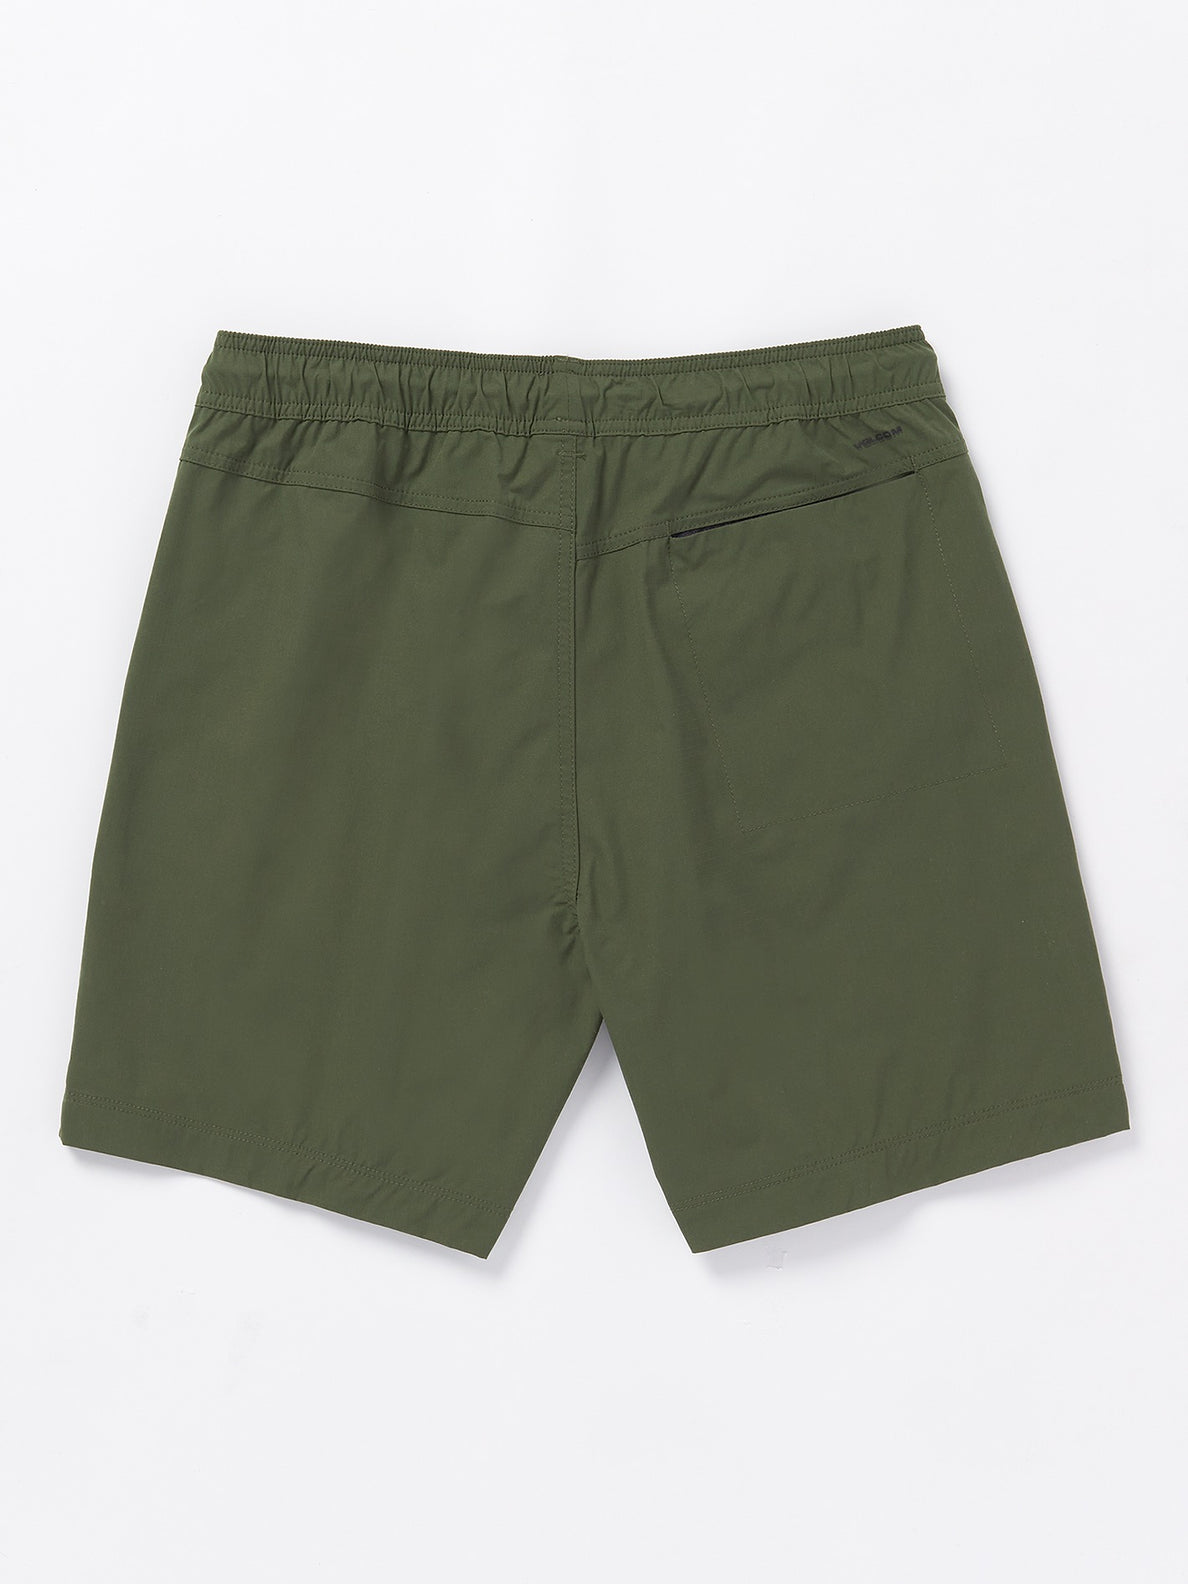 Hoxstop Elastic Waist Shorts - Squadron Green